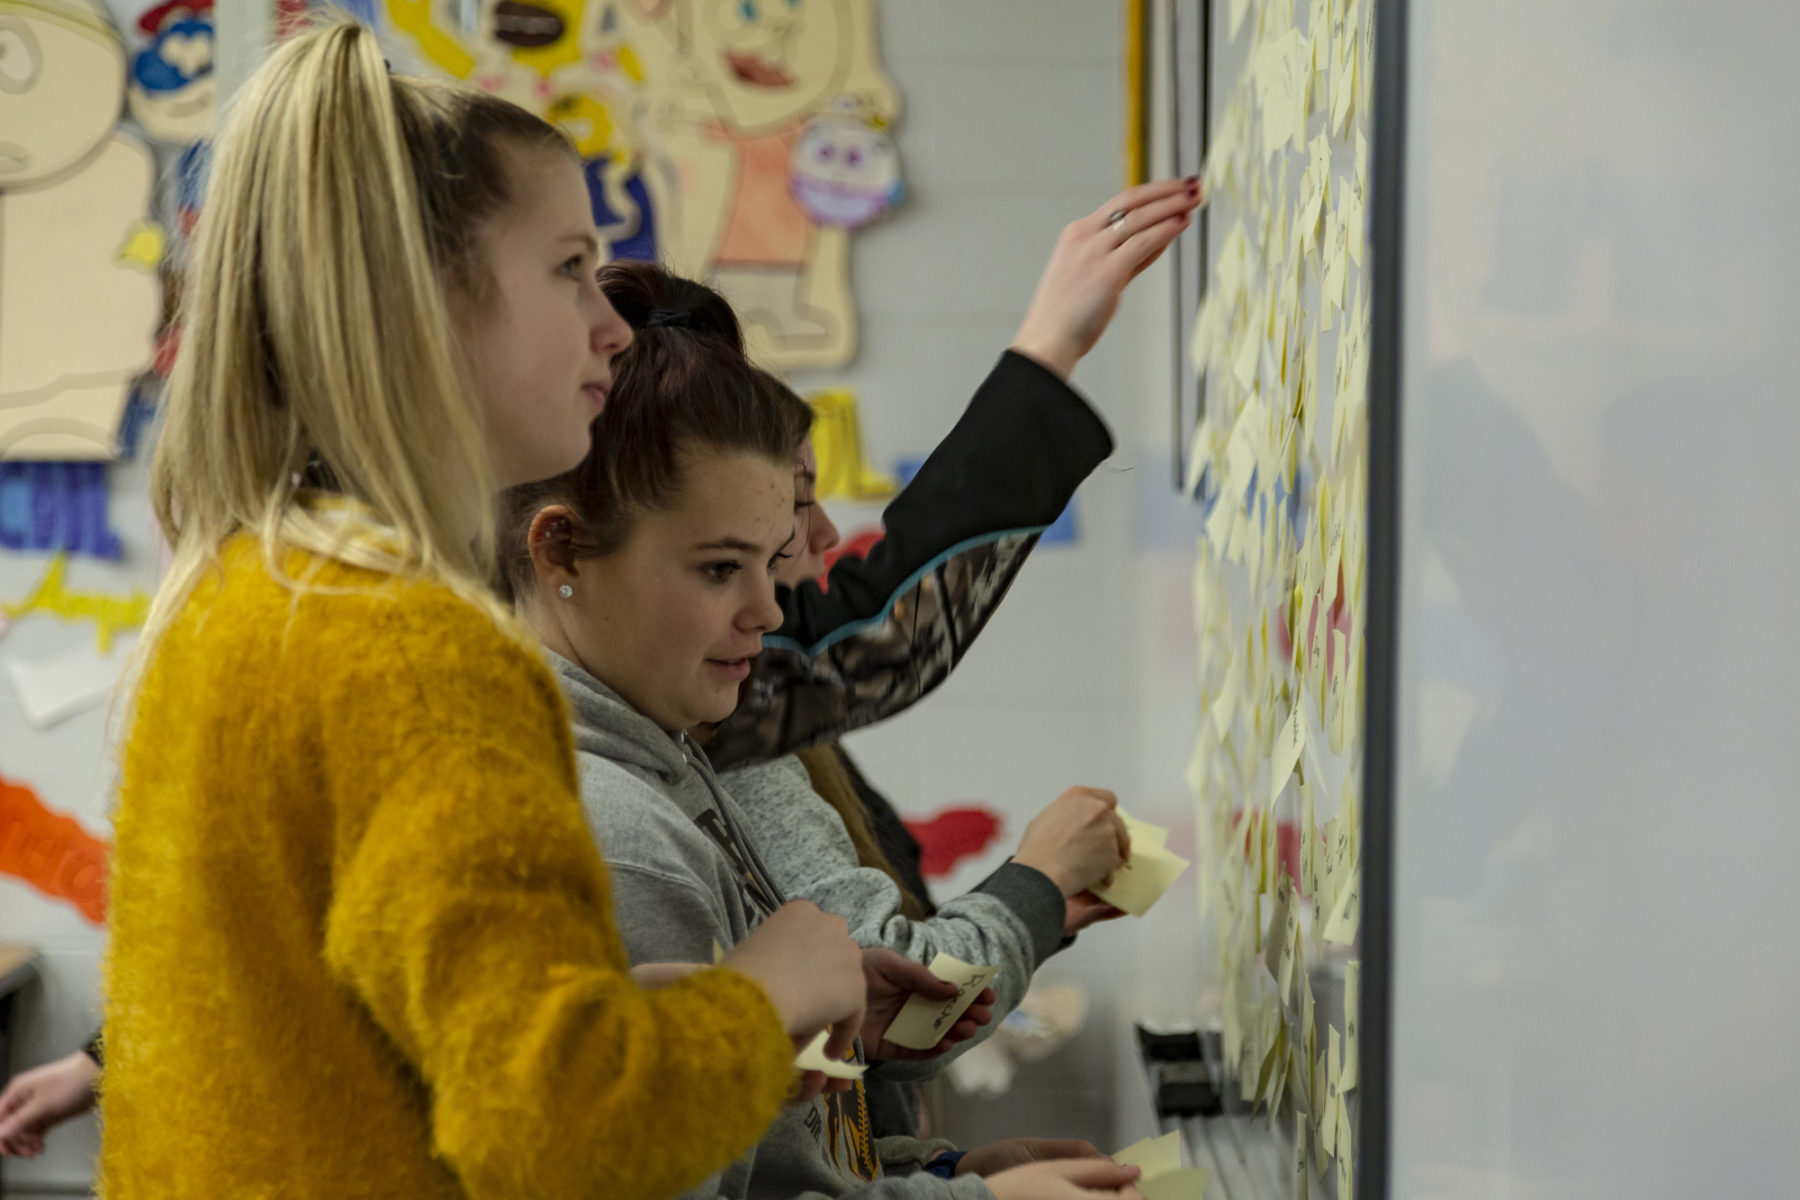 Students stick sticky notes to a whiteboard